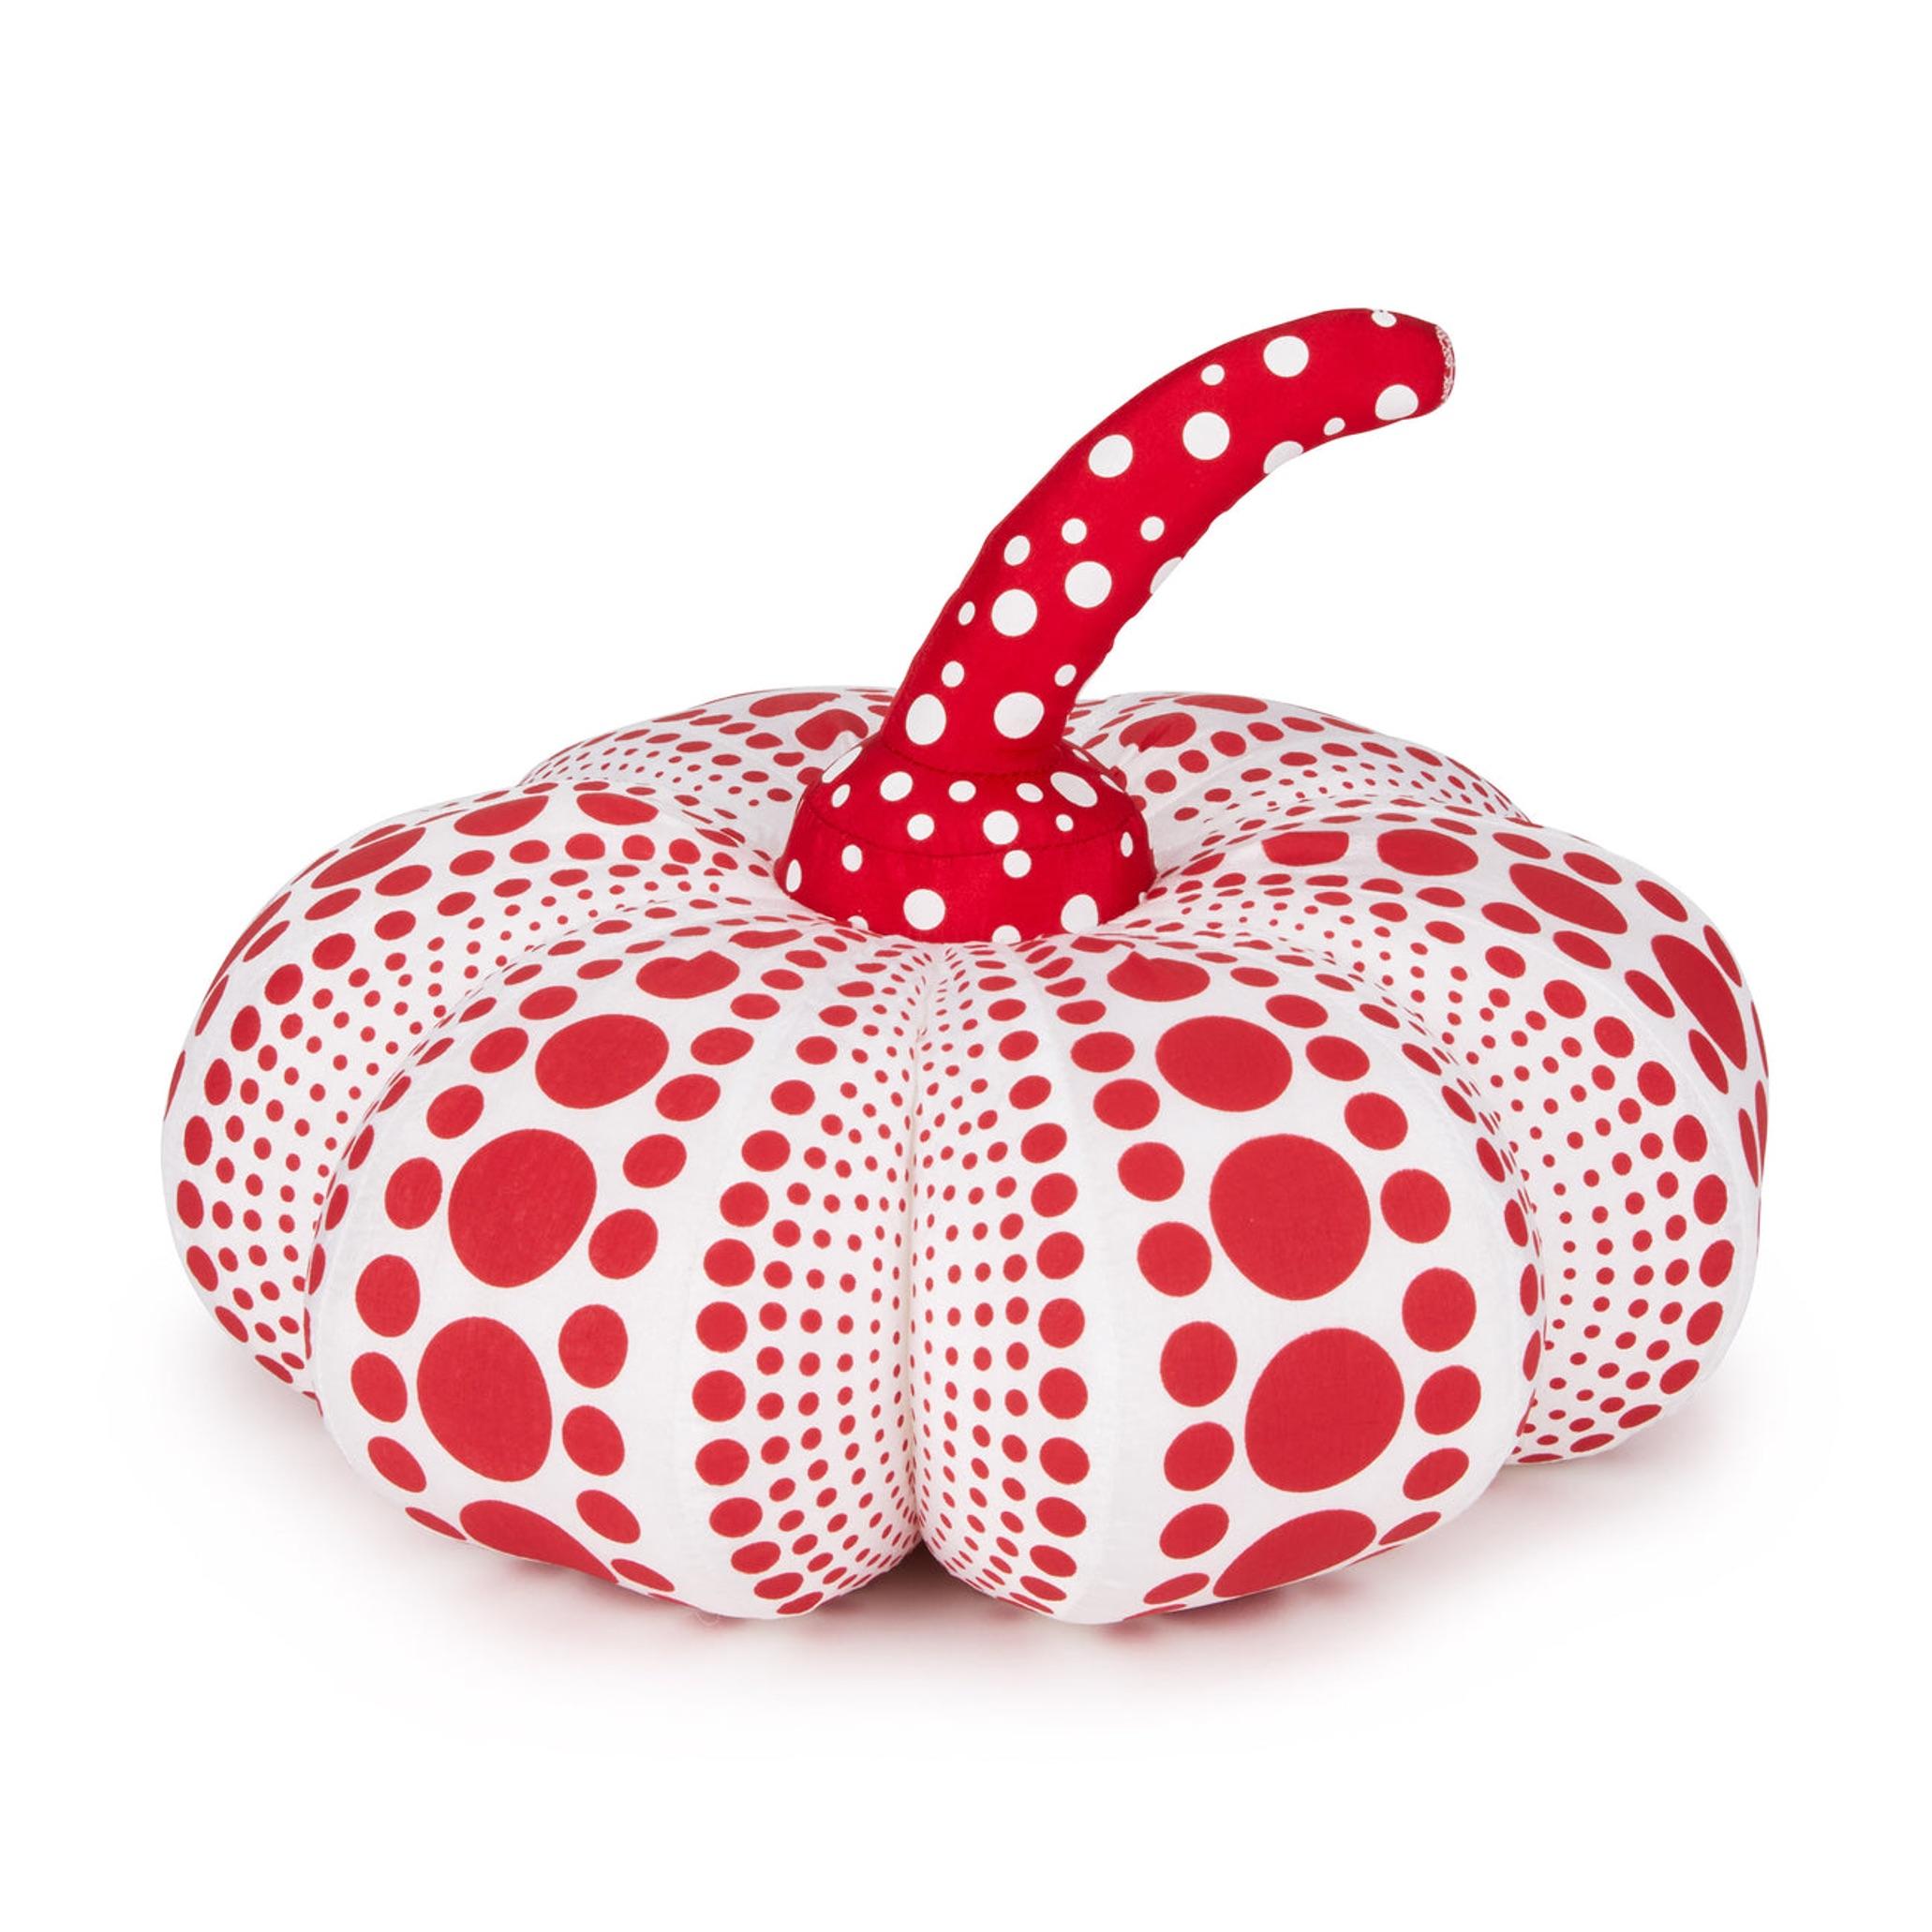 Yayoi Kusama
Large Pumpkin Plush Red and White, 2004
Polyester, Nylon
13 4/5 × 21 7/10 × 21 7/10 in  35 × 55 × 55 cm
